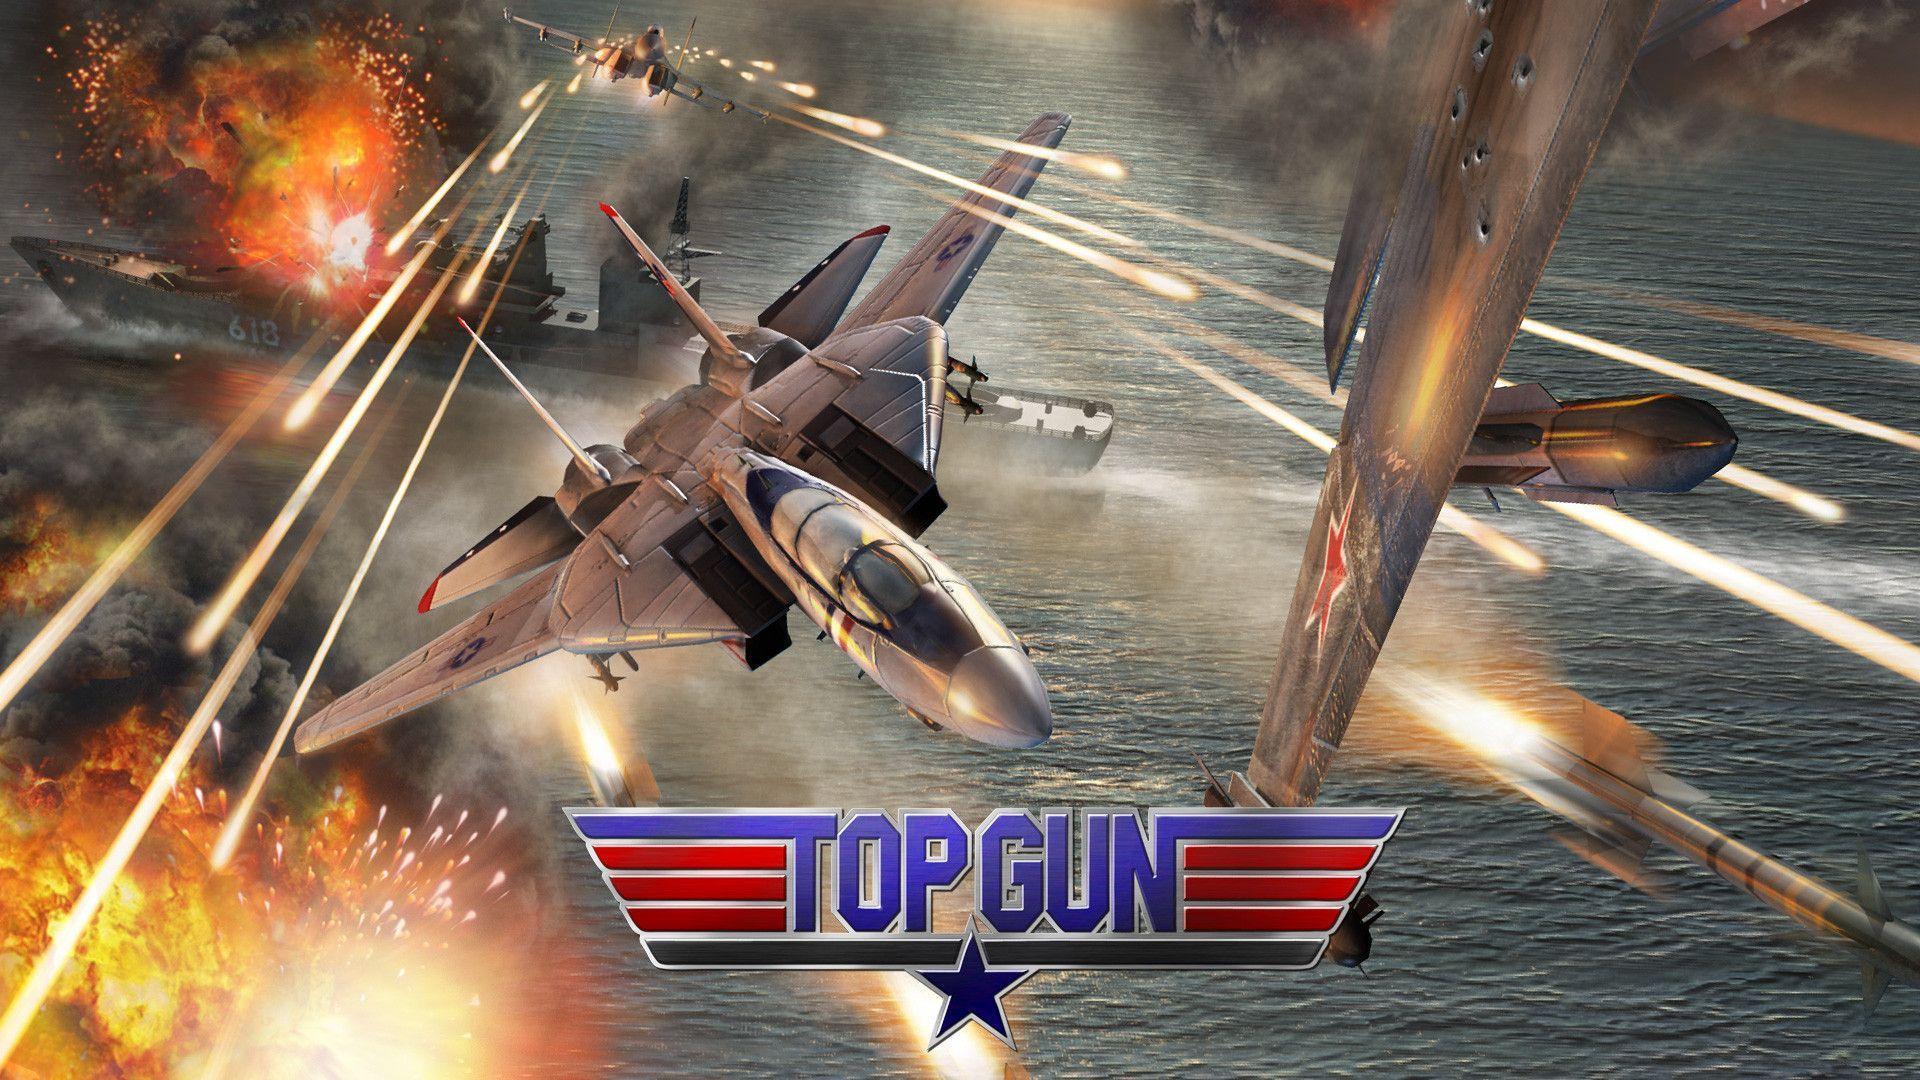 Fonds d&;écran Top Gun, tous les wallpaper Top Gun